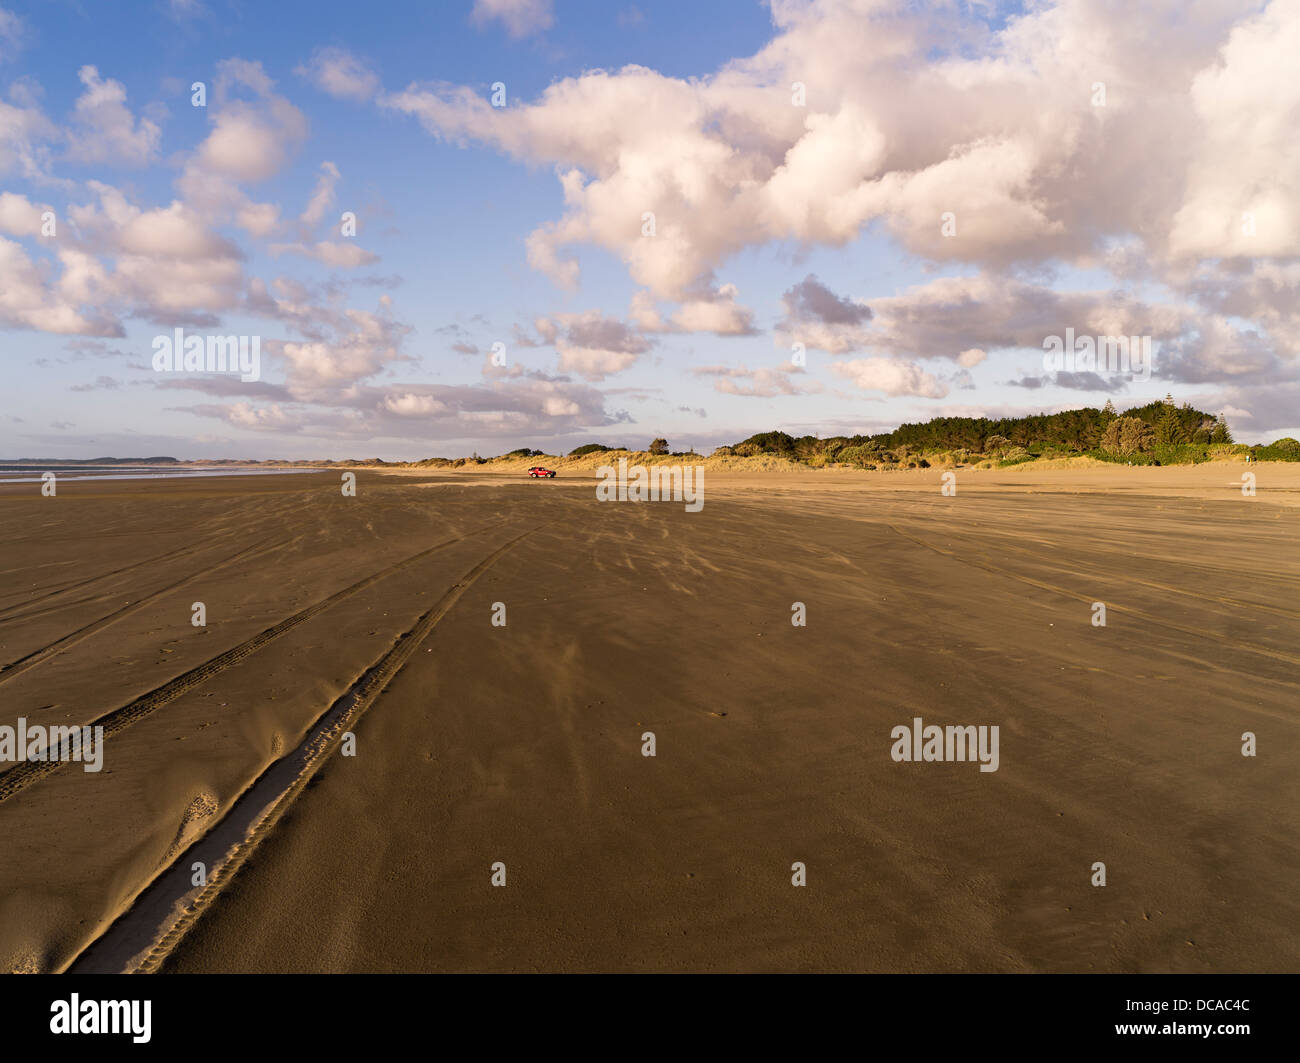 dh Ninety Mile Beach AHIPARA NUOVA ZELANDA sabbia spiaggia dune auto rossa pneumatici marchi strada costiera isola del nord Foto Stock